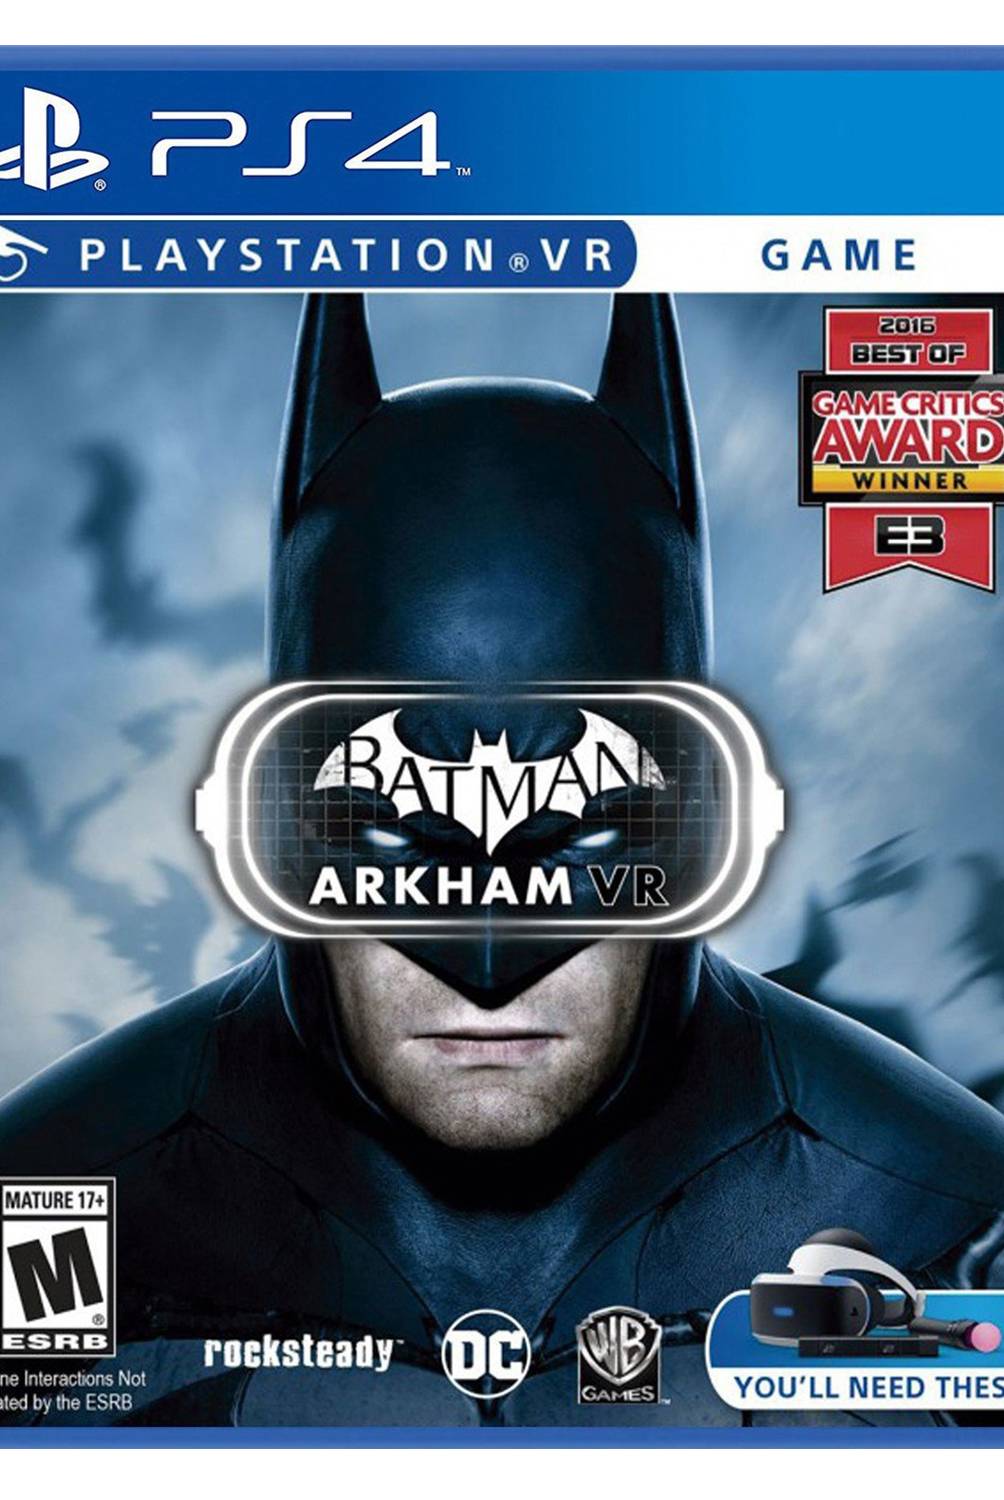 PLAYSTATION - BATMAN ARKHAM VR - PS4.